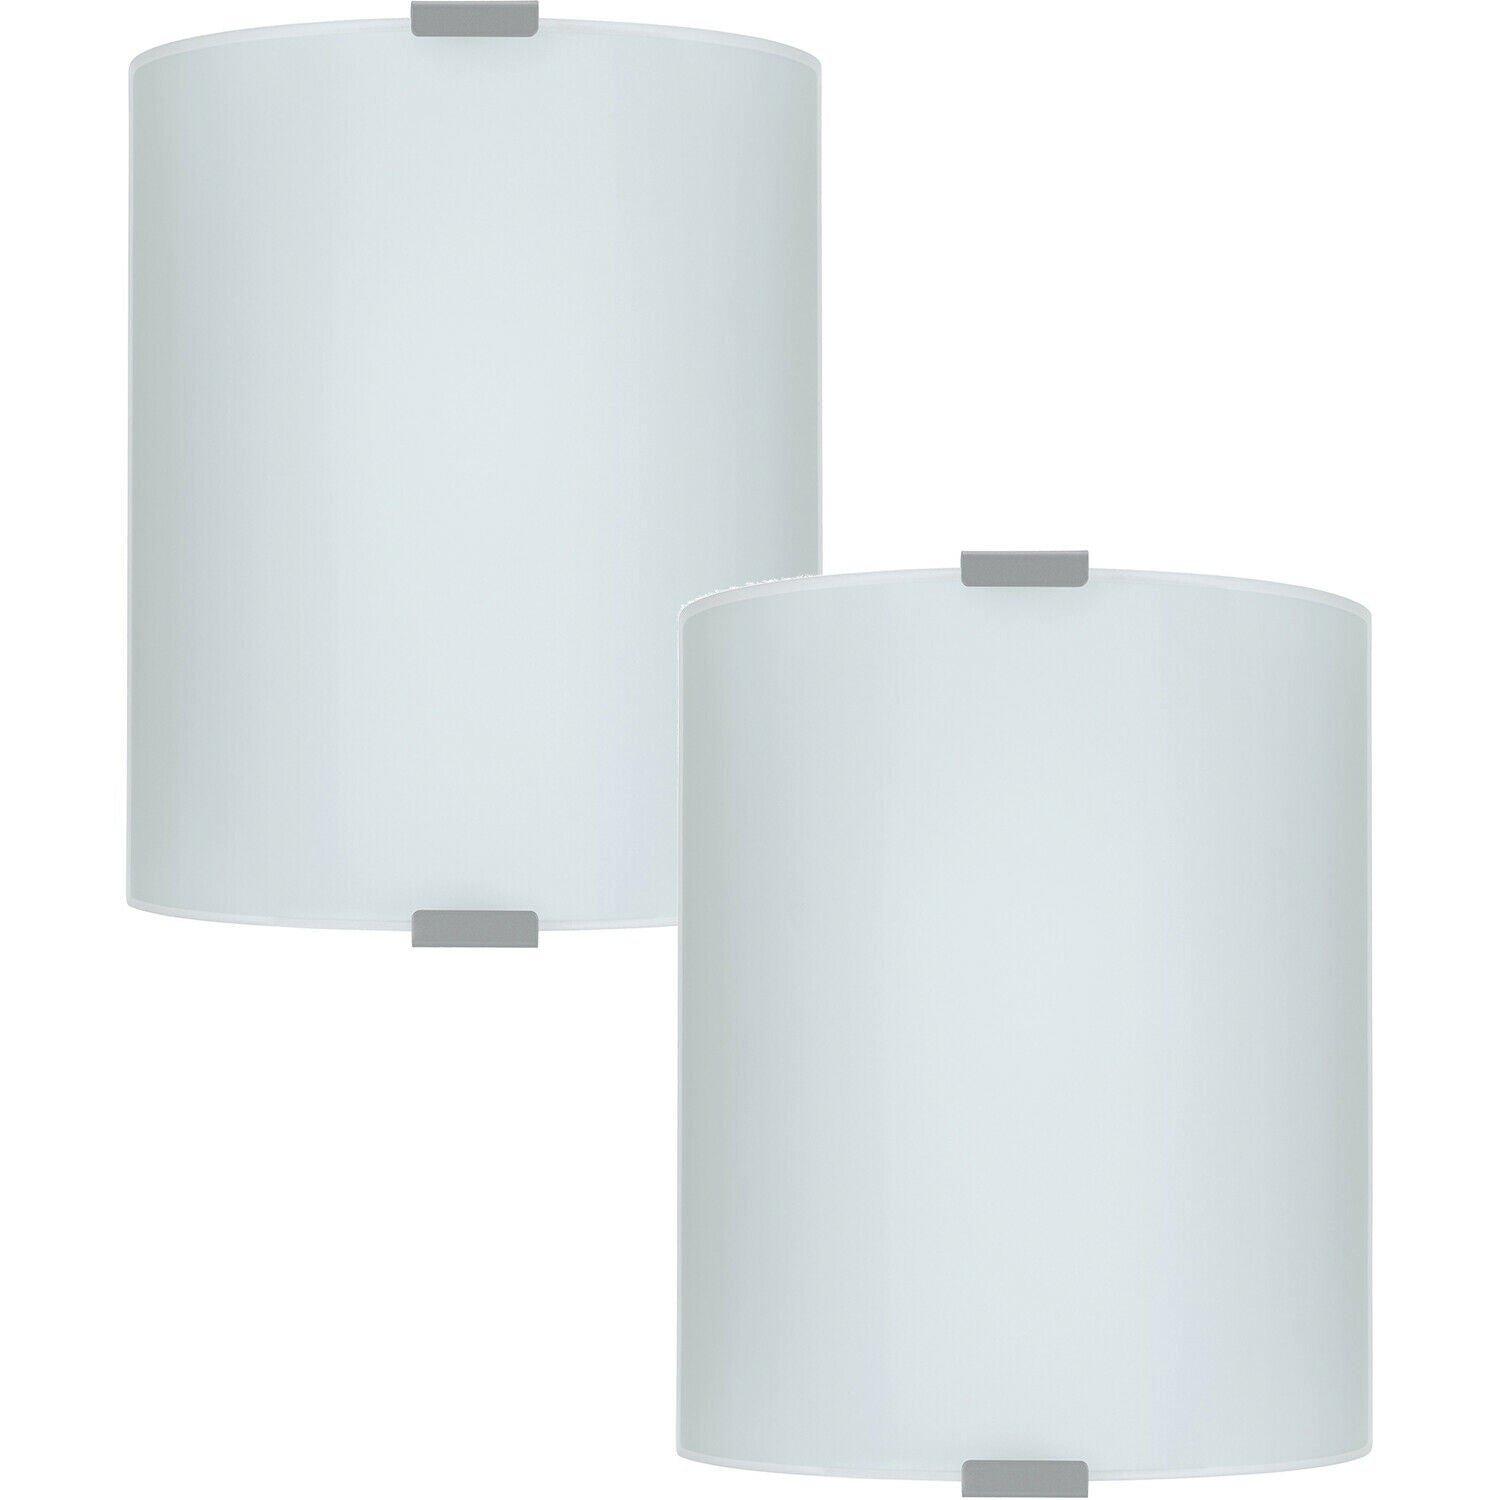 2 PACK Wall Flush Ceiling Light Colour Silver Shade White Satin Glass E27 1x60W